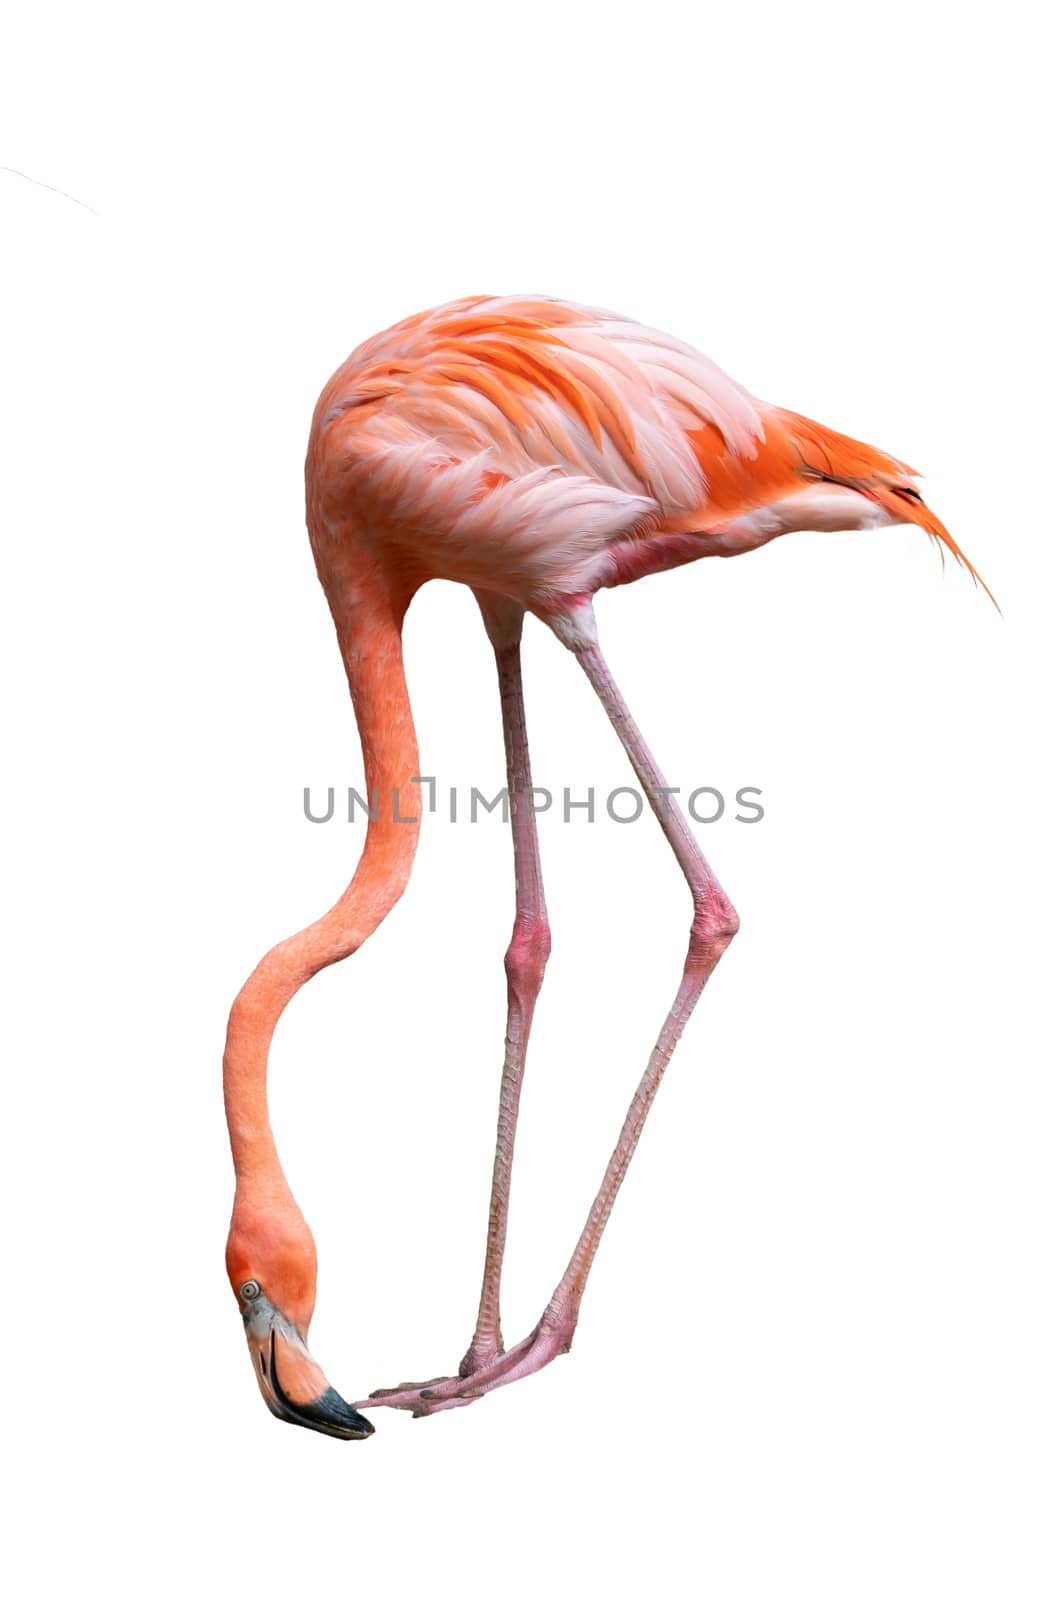 american flamingo bird (Phoenicopterus ruber) isolated on white background